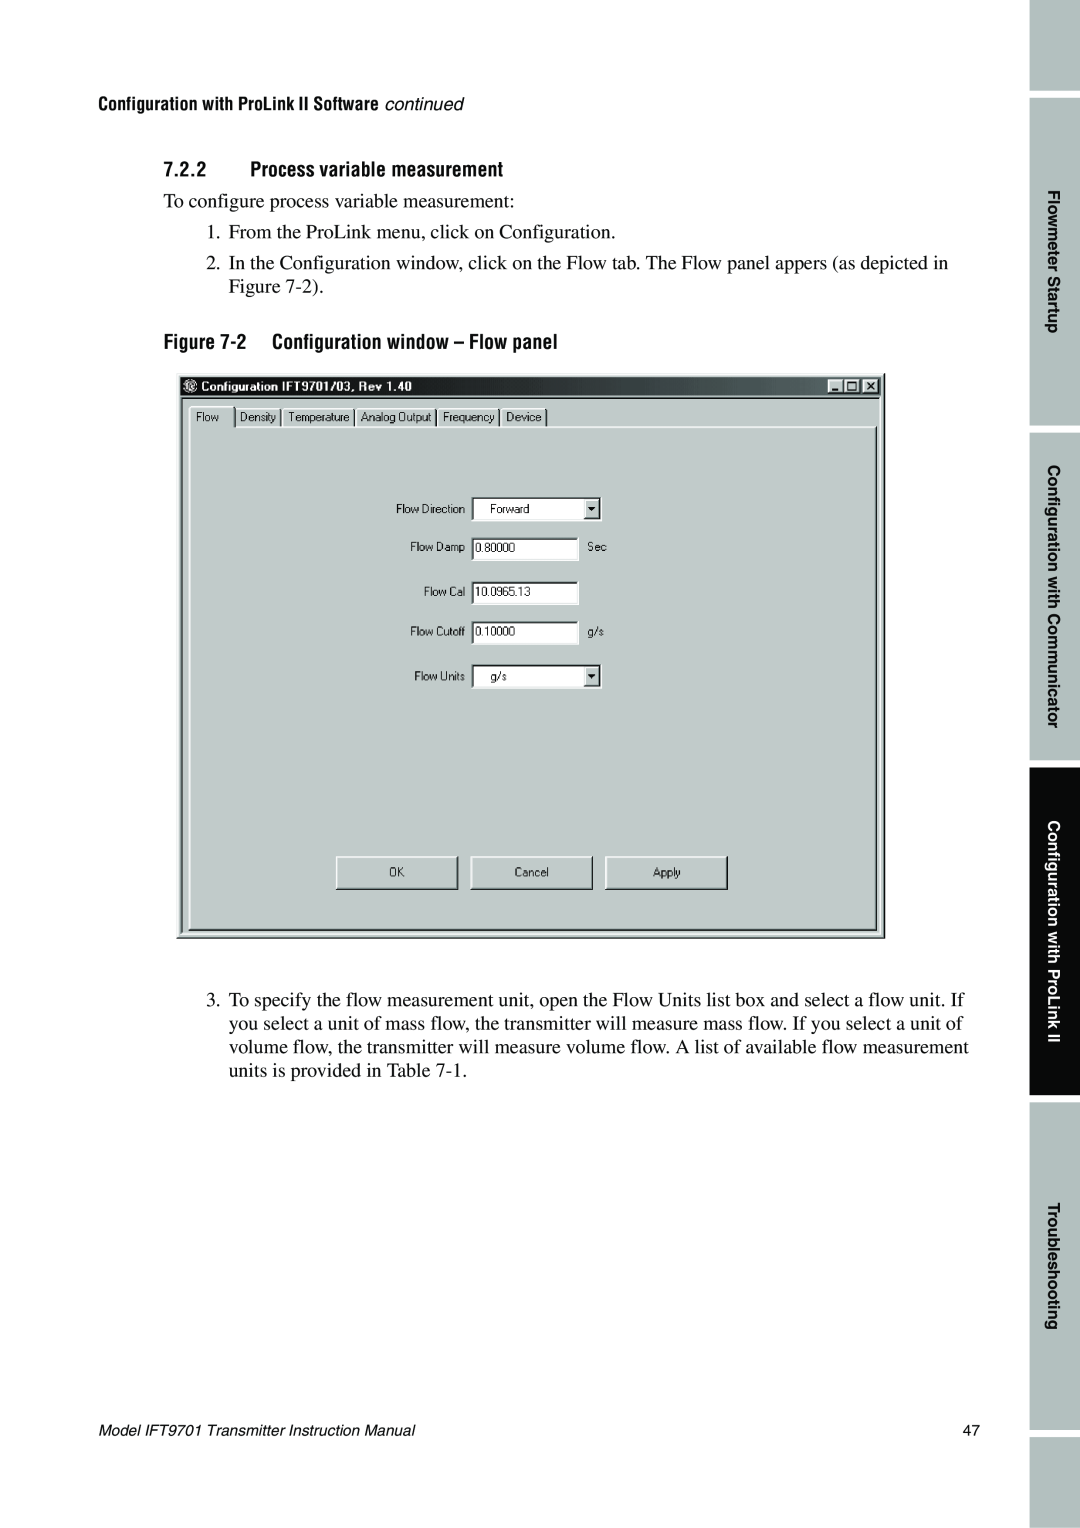 Emerson IFT9701 instruction manual 7.2.2Process variable measurement, 2Configuration window - Flow panel 